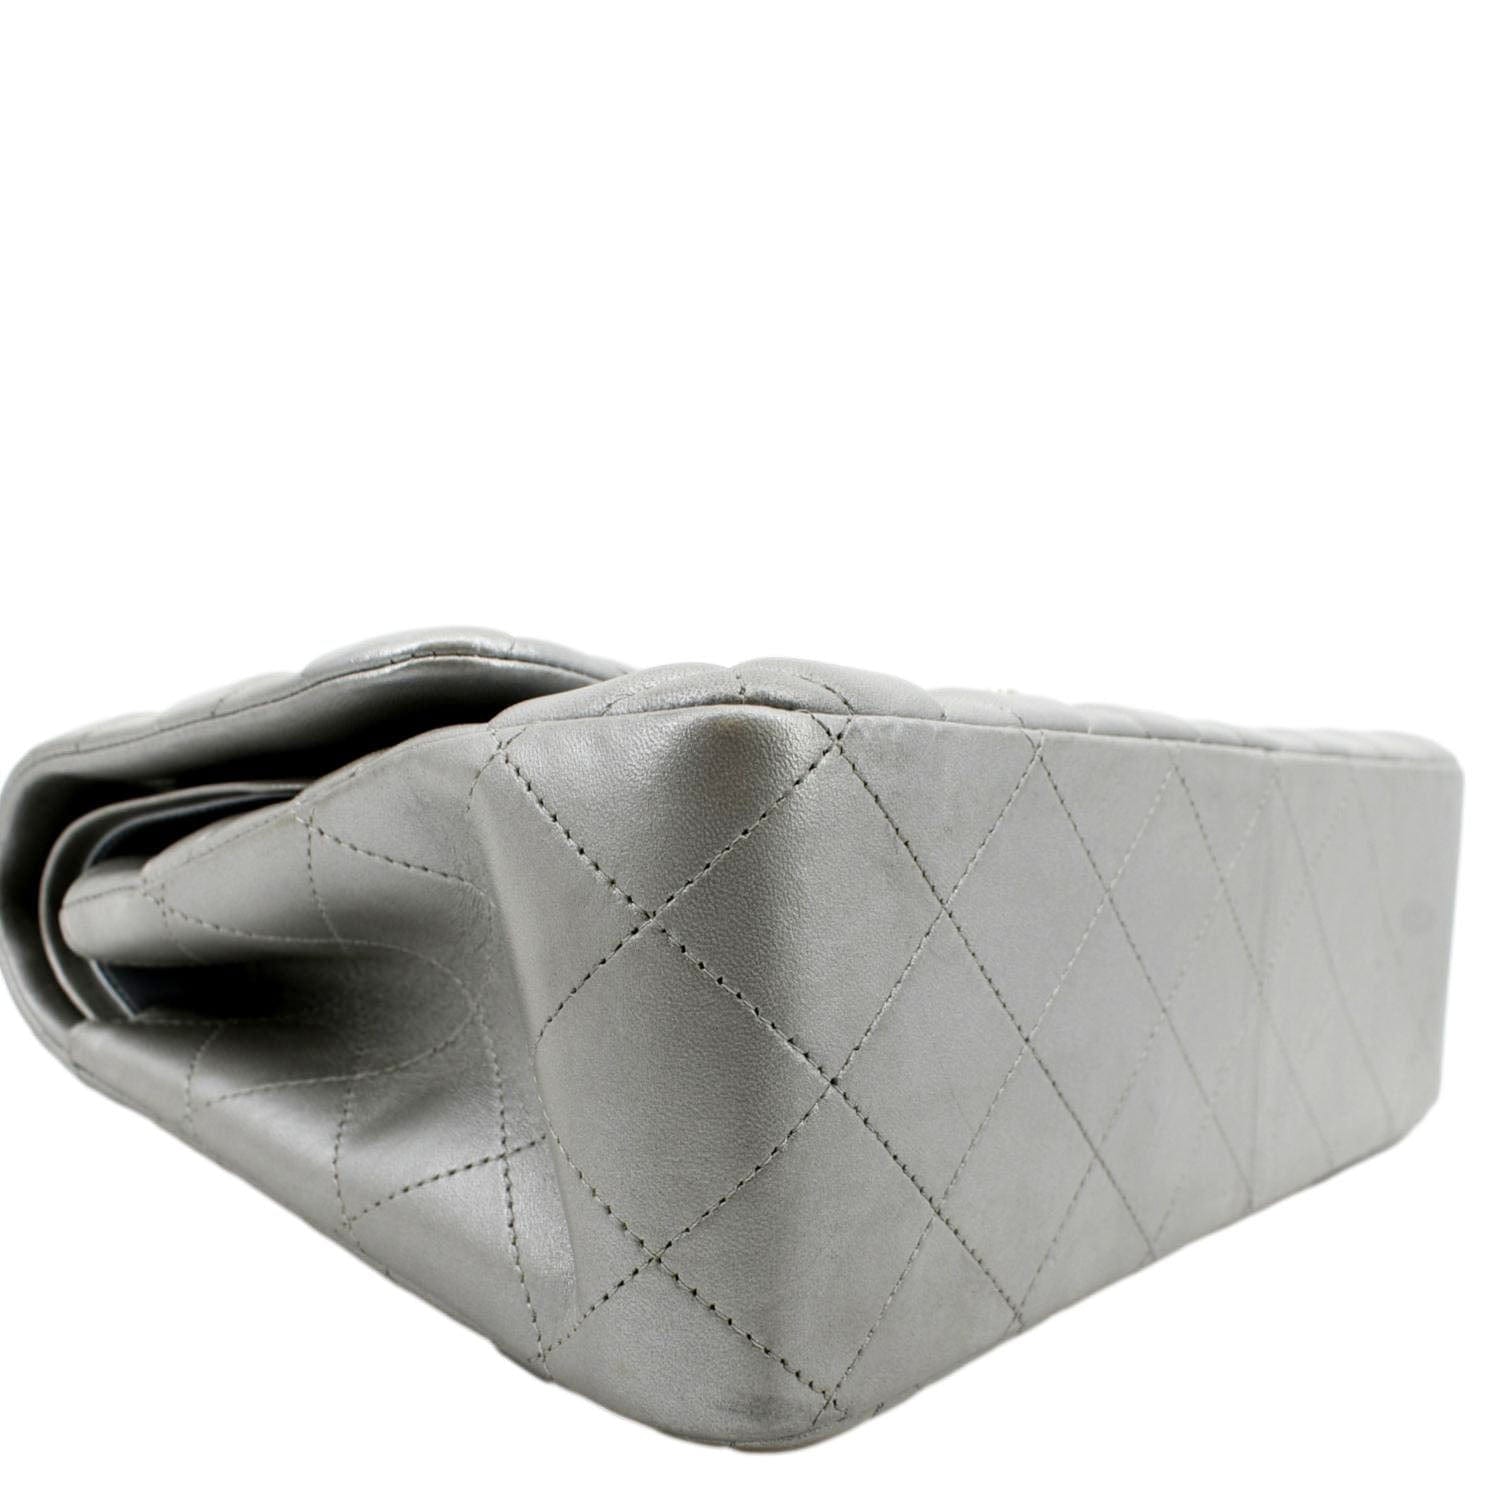 chanel white handbag leather